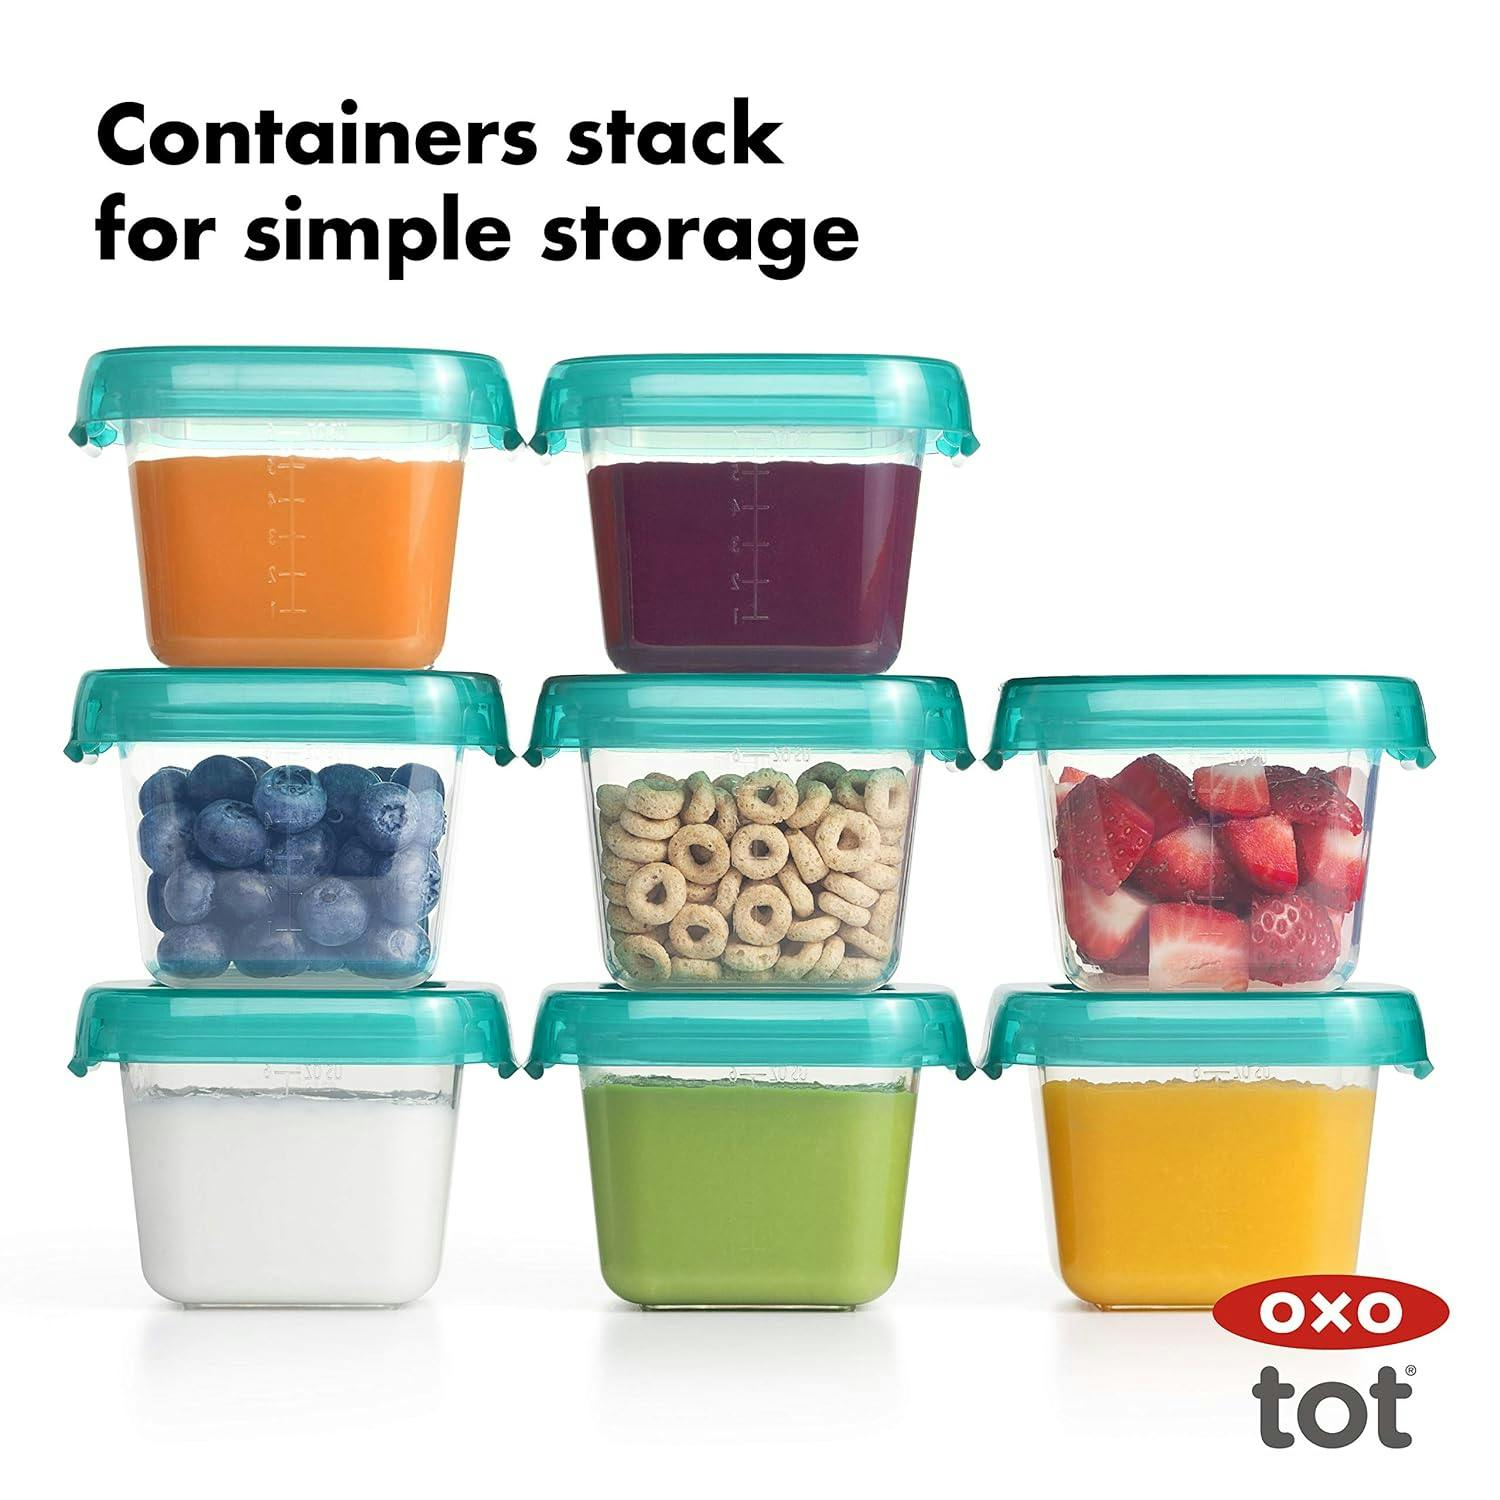 Teal 6 oz BPA-Free Plastic Baby Food Storage Set with Airtight Lids